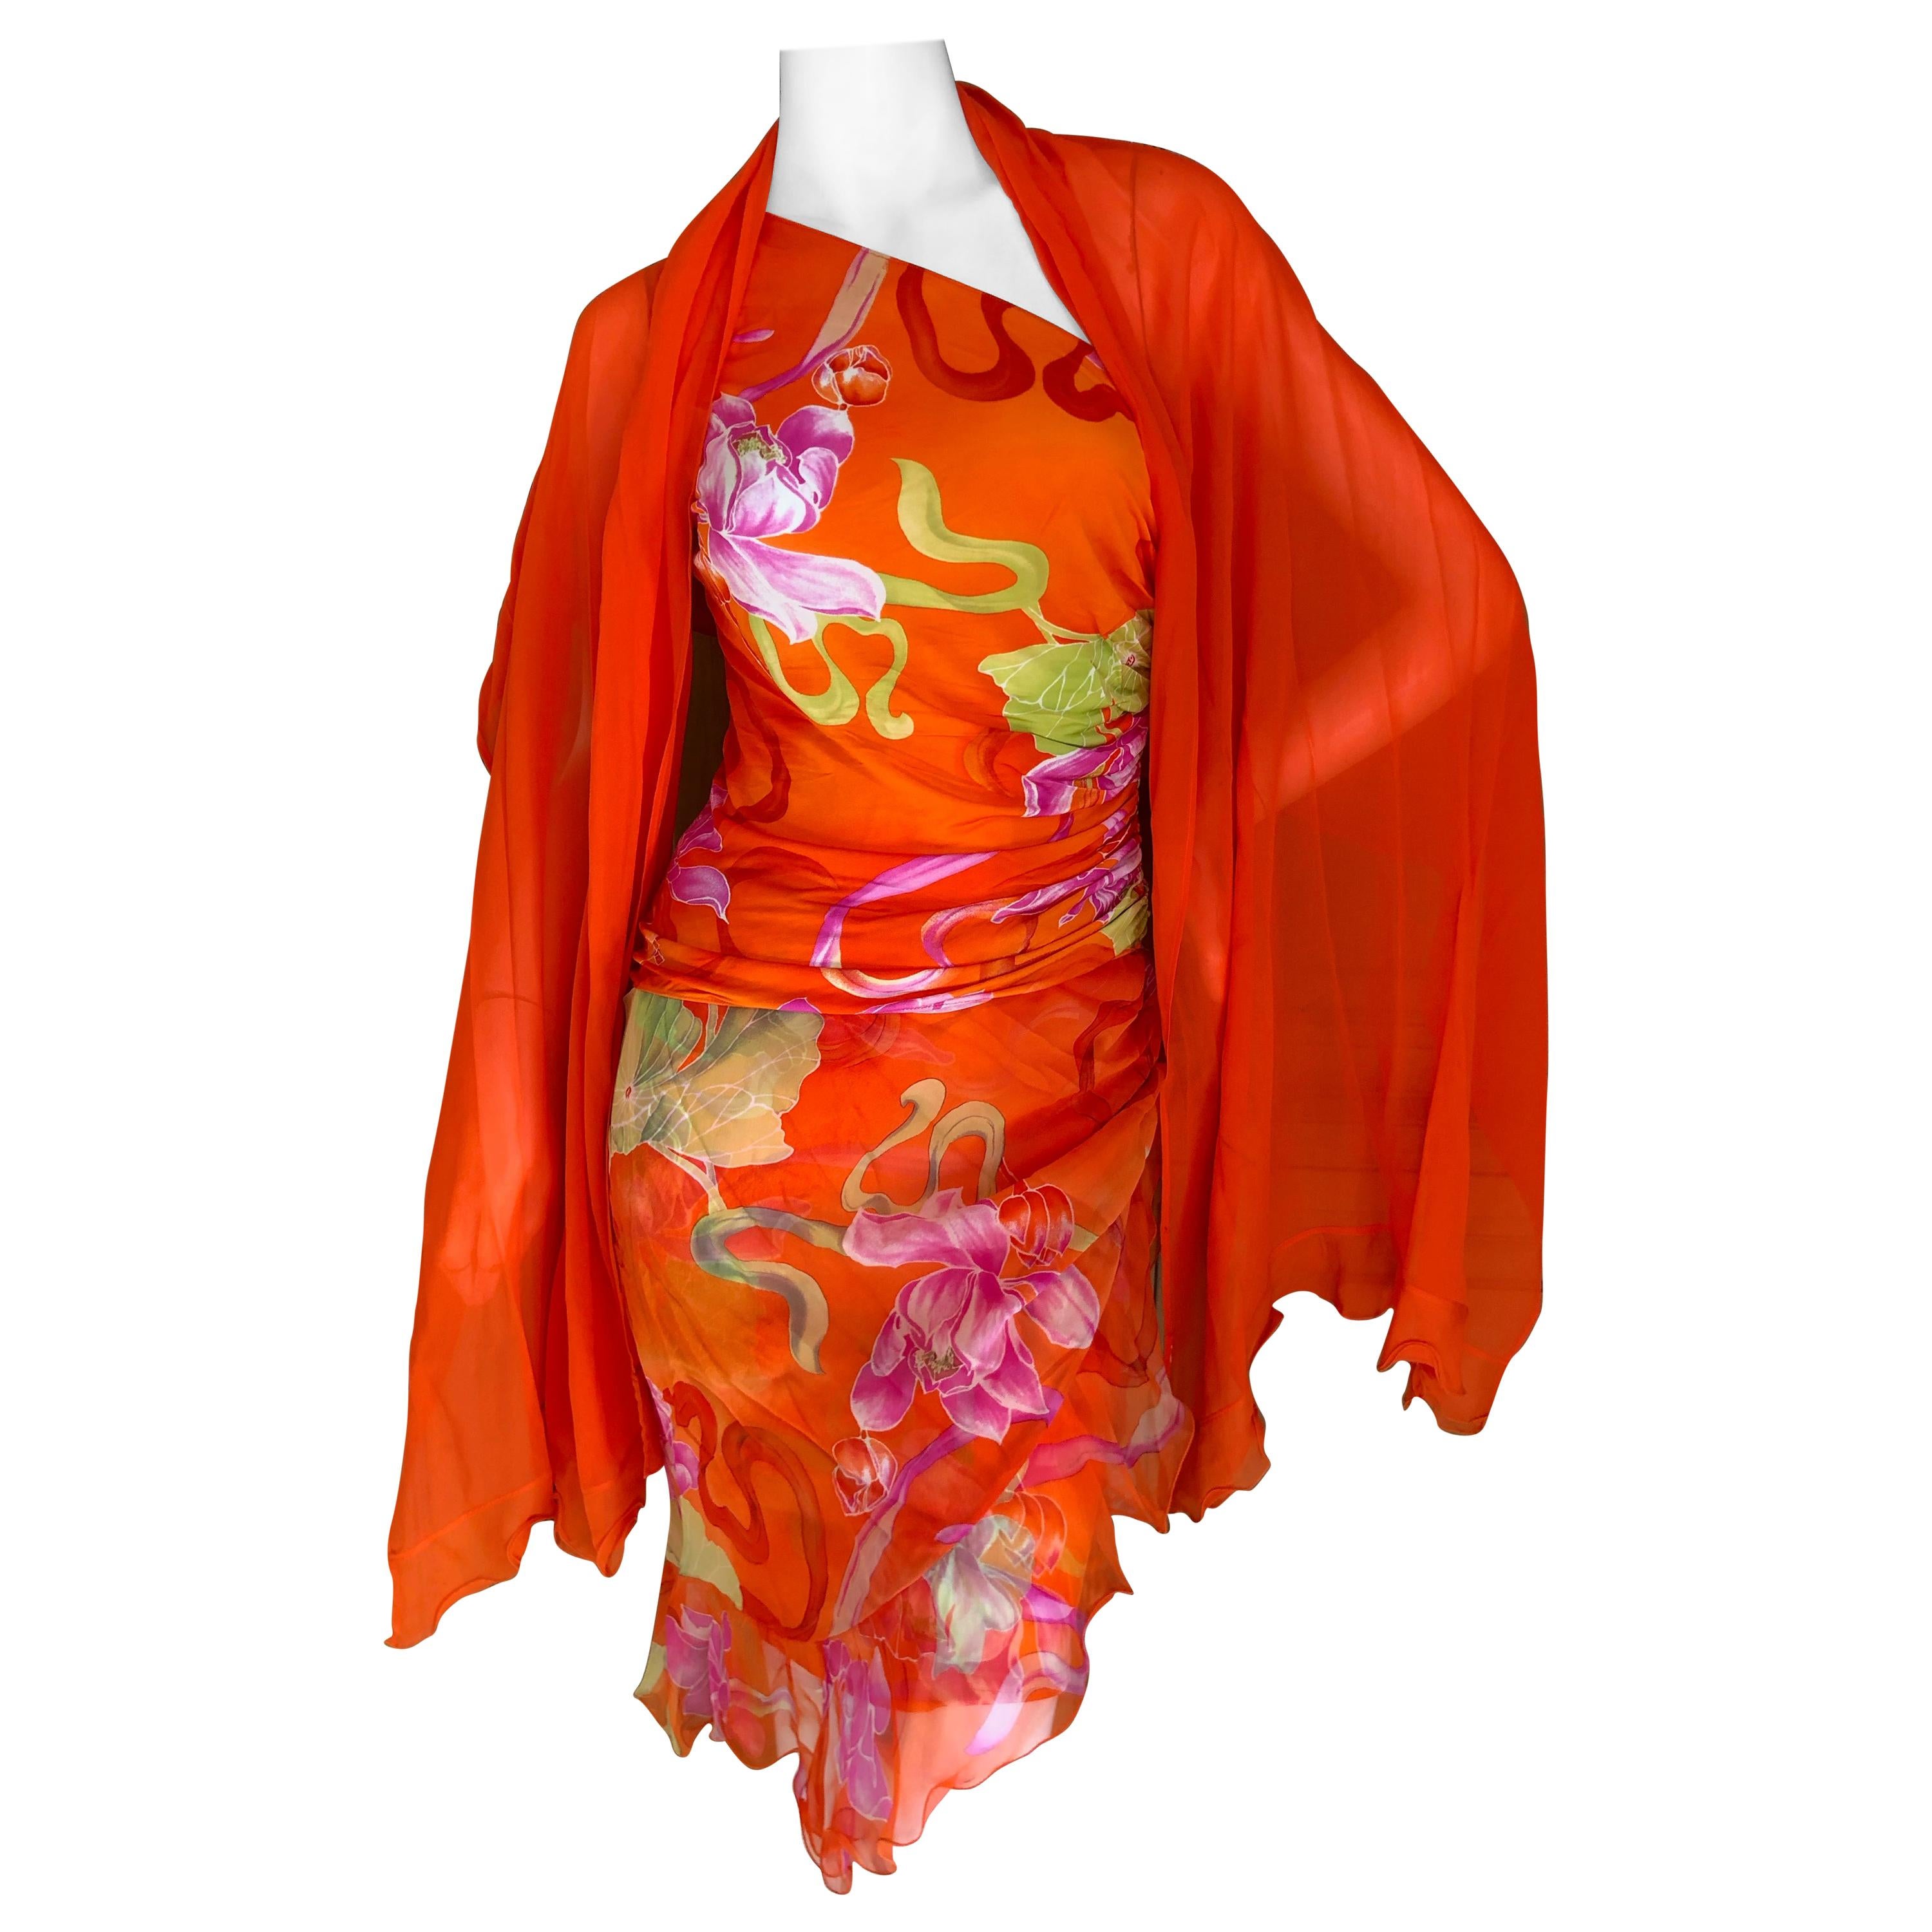 Emanuel Ungaro 3 Piece Silk Floral One Shoulder Dress w Shawl by Peter Dundas For Sale